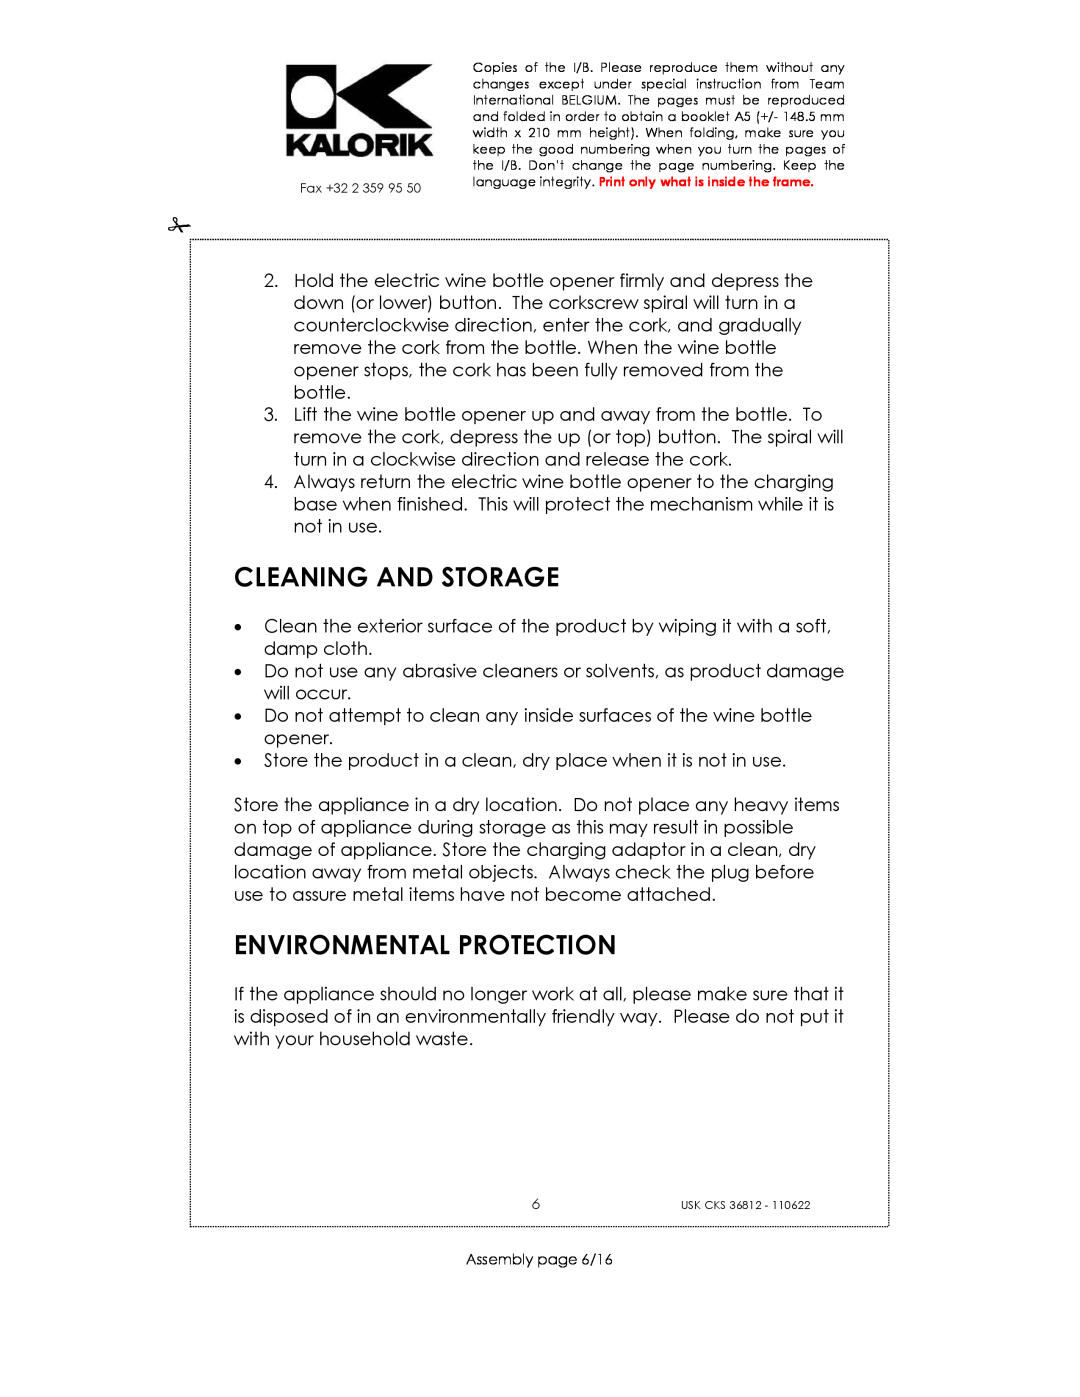 Kalorik USK CKS 36812 manual Cleaning And Storage, Environmental Protection 